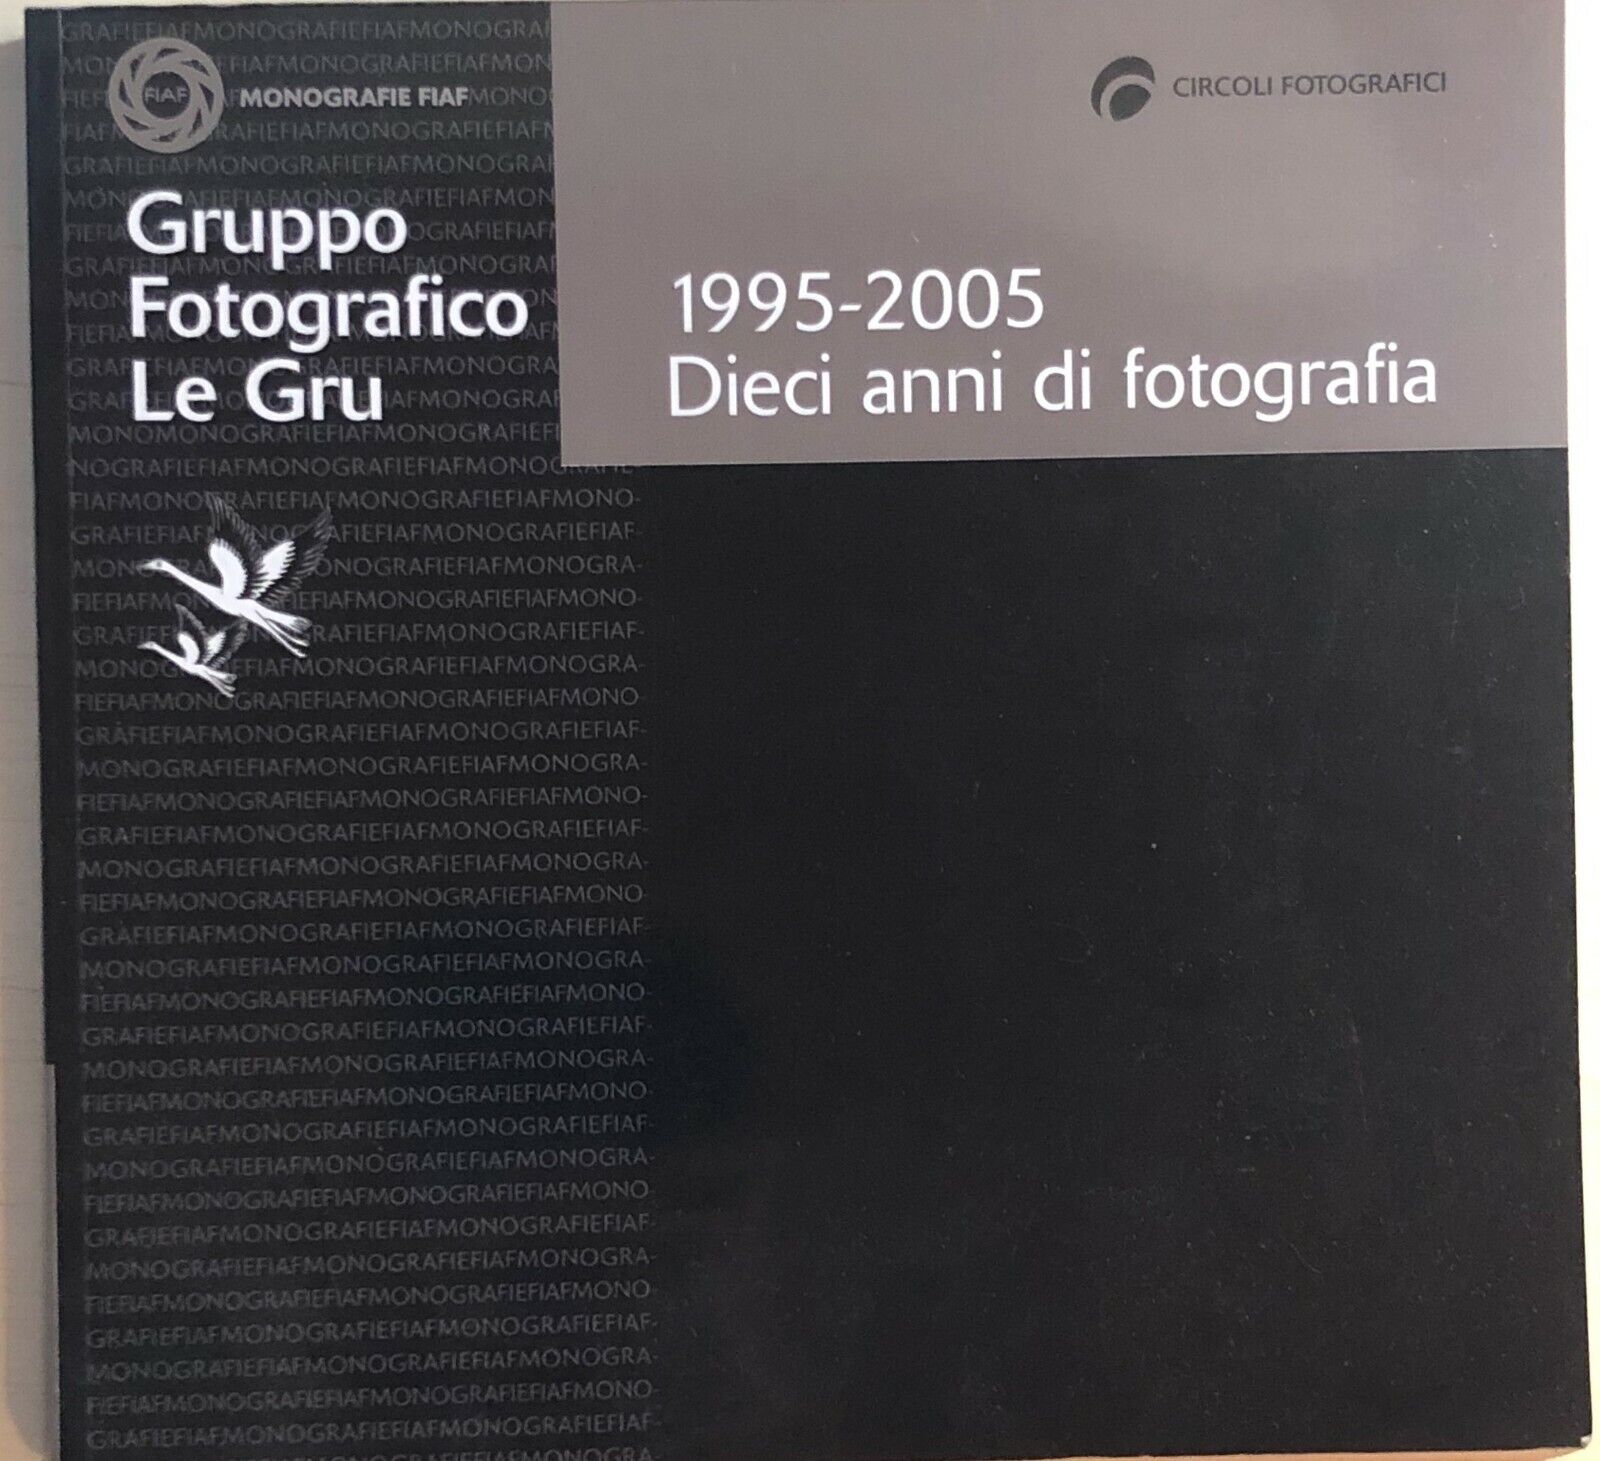 1995-2005: dieci anni di fotografia di Gruppo Fotografico Le Gru, 2005, Fiaf